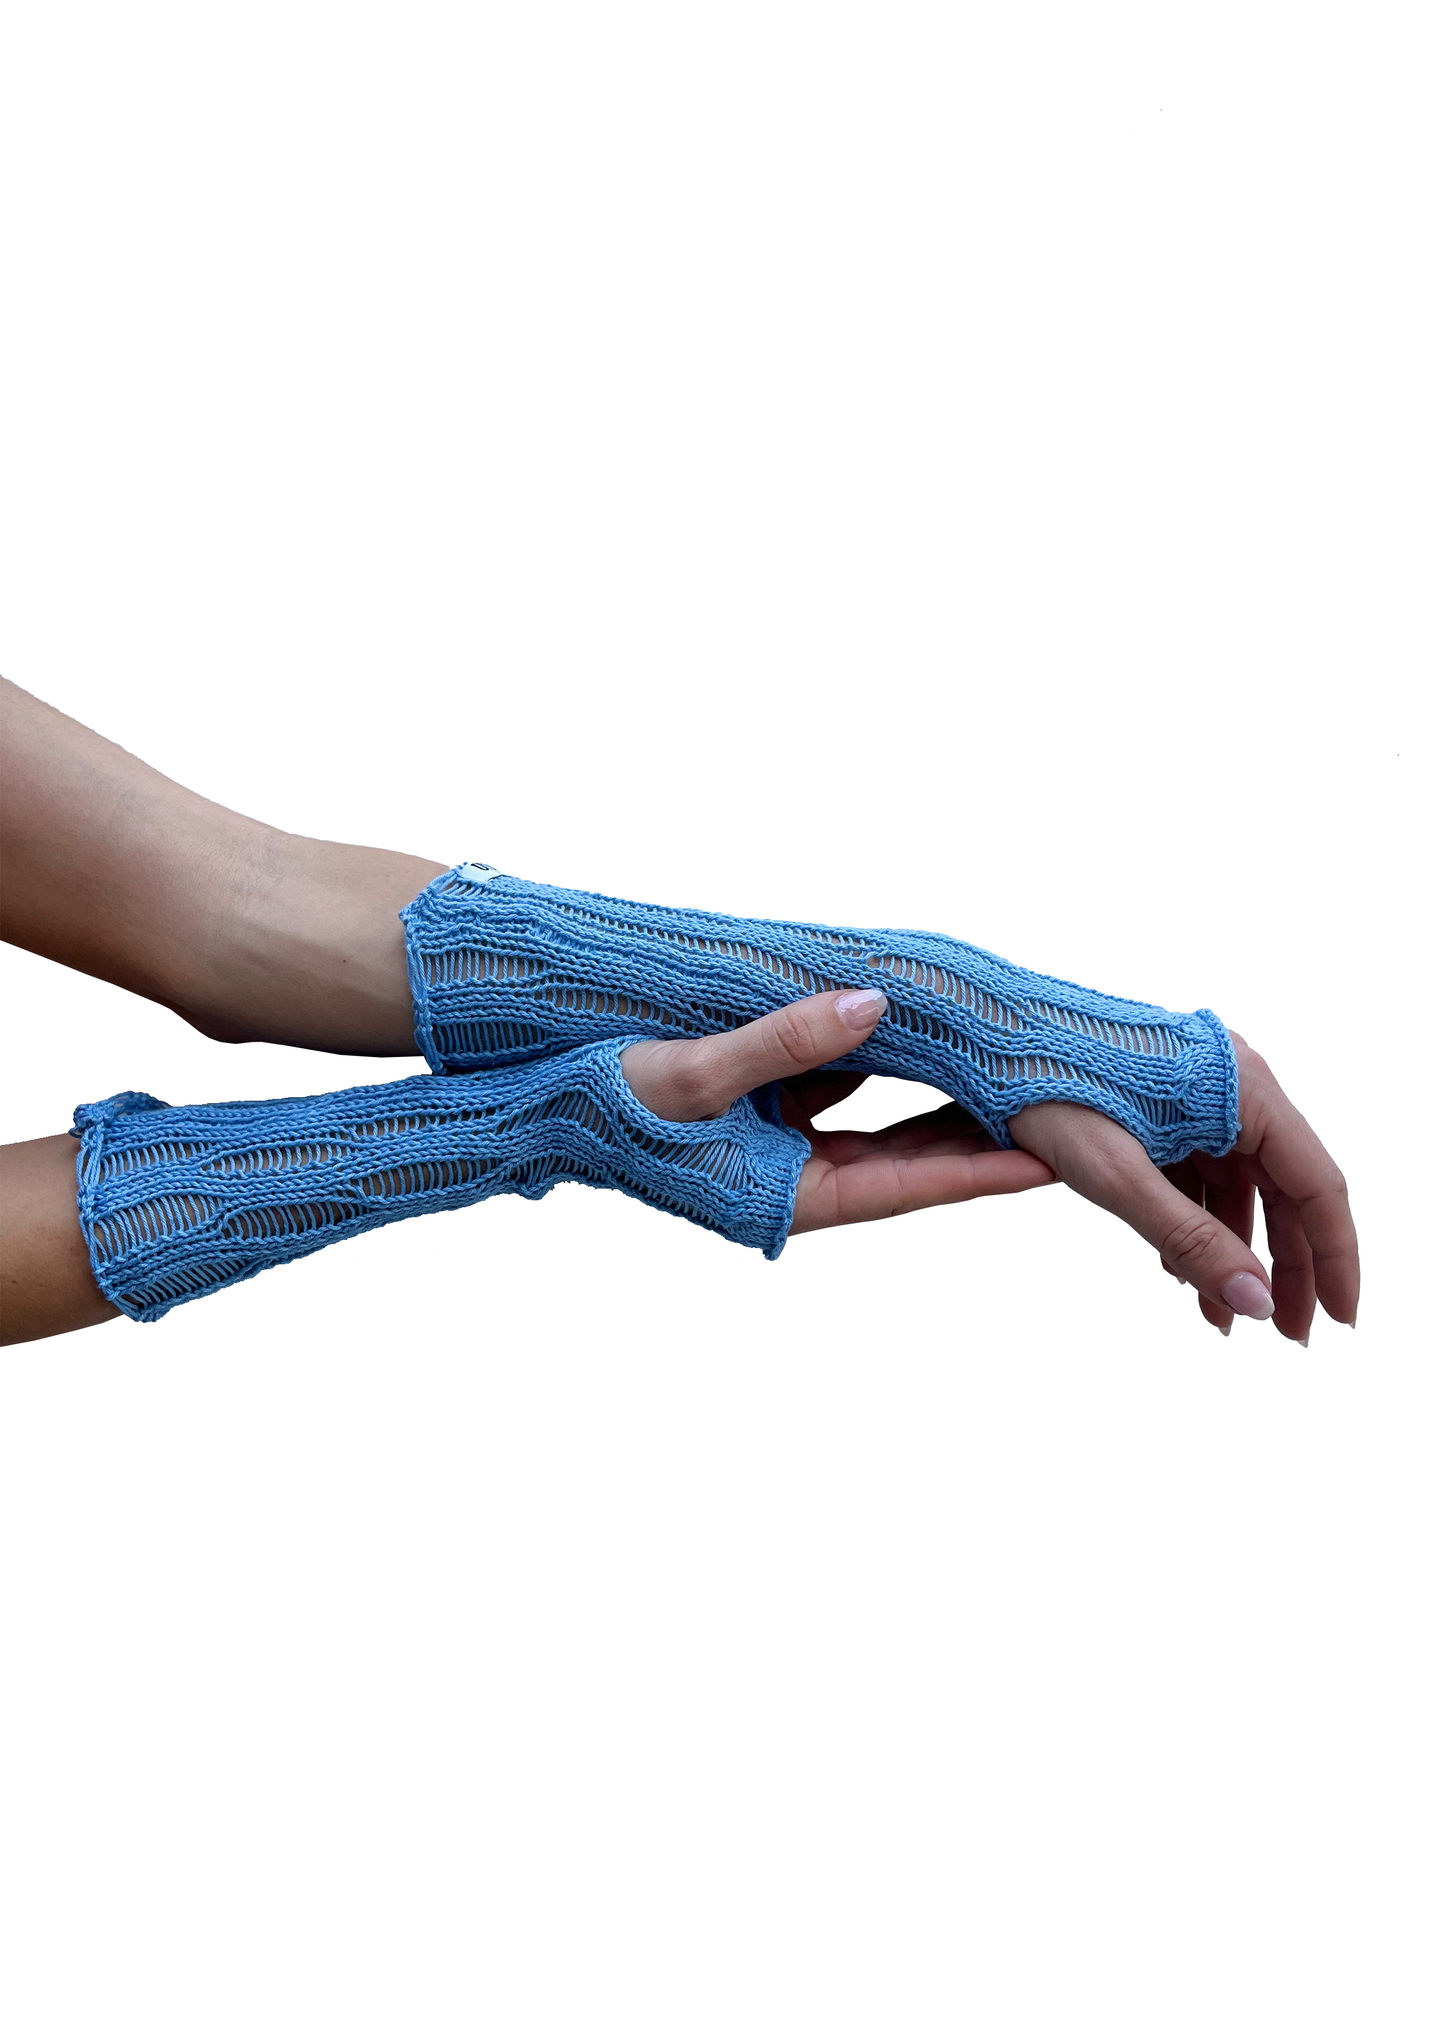 Holly Blue gloves